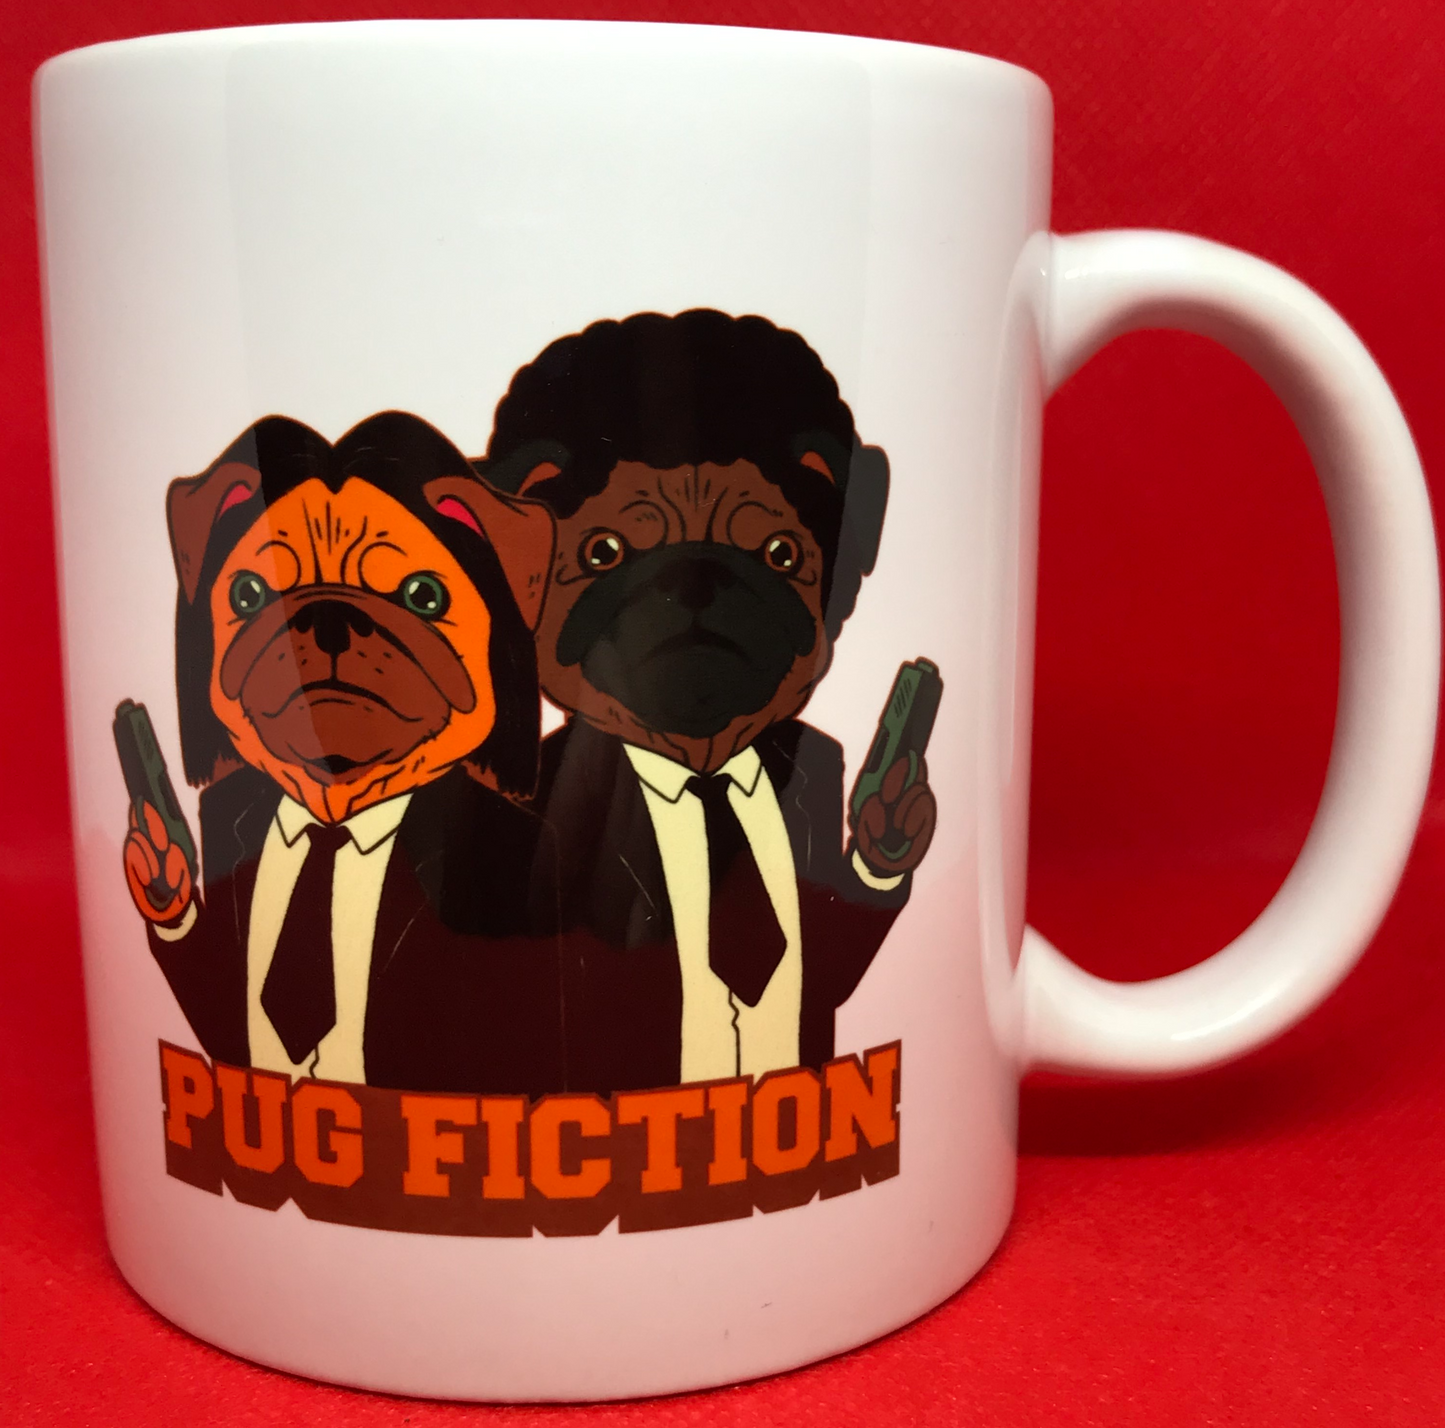 Pug Fiction (limited prints)